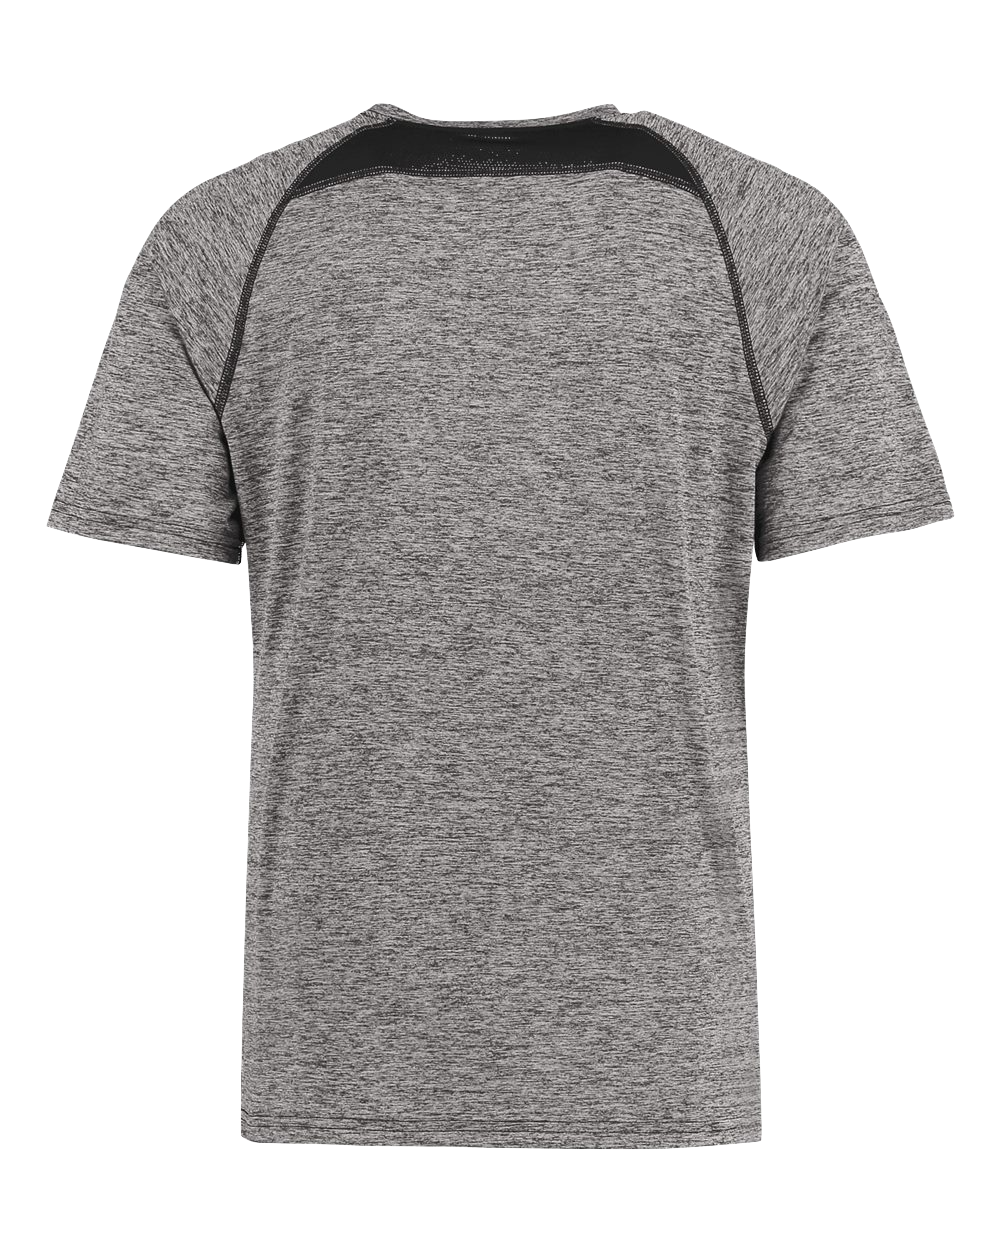 HAMMOCKING Poly/Elastane High Performance T-Shirt with UPF 50+